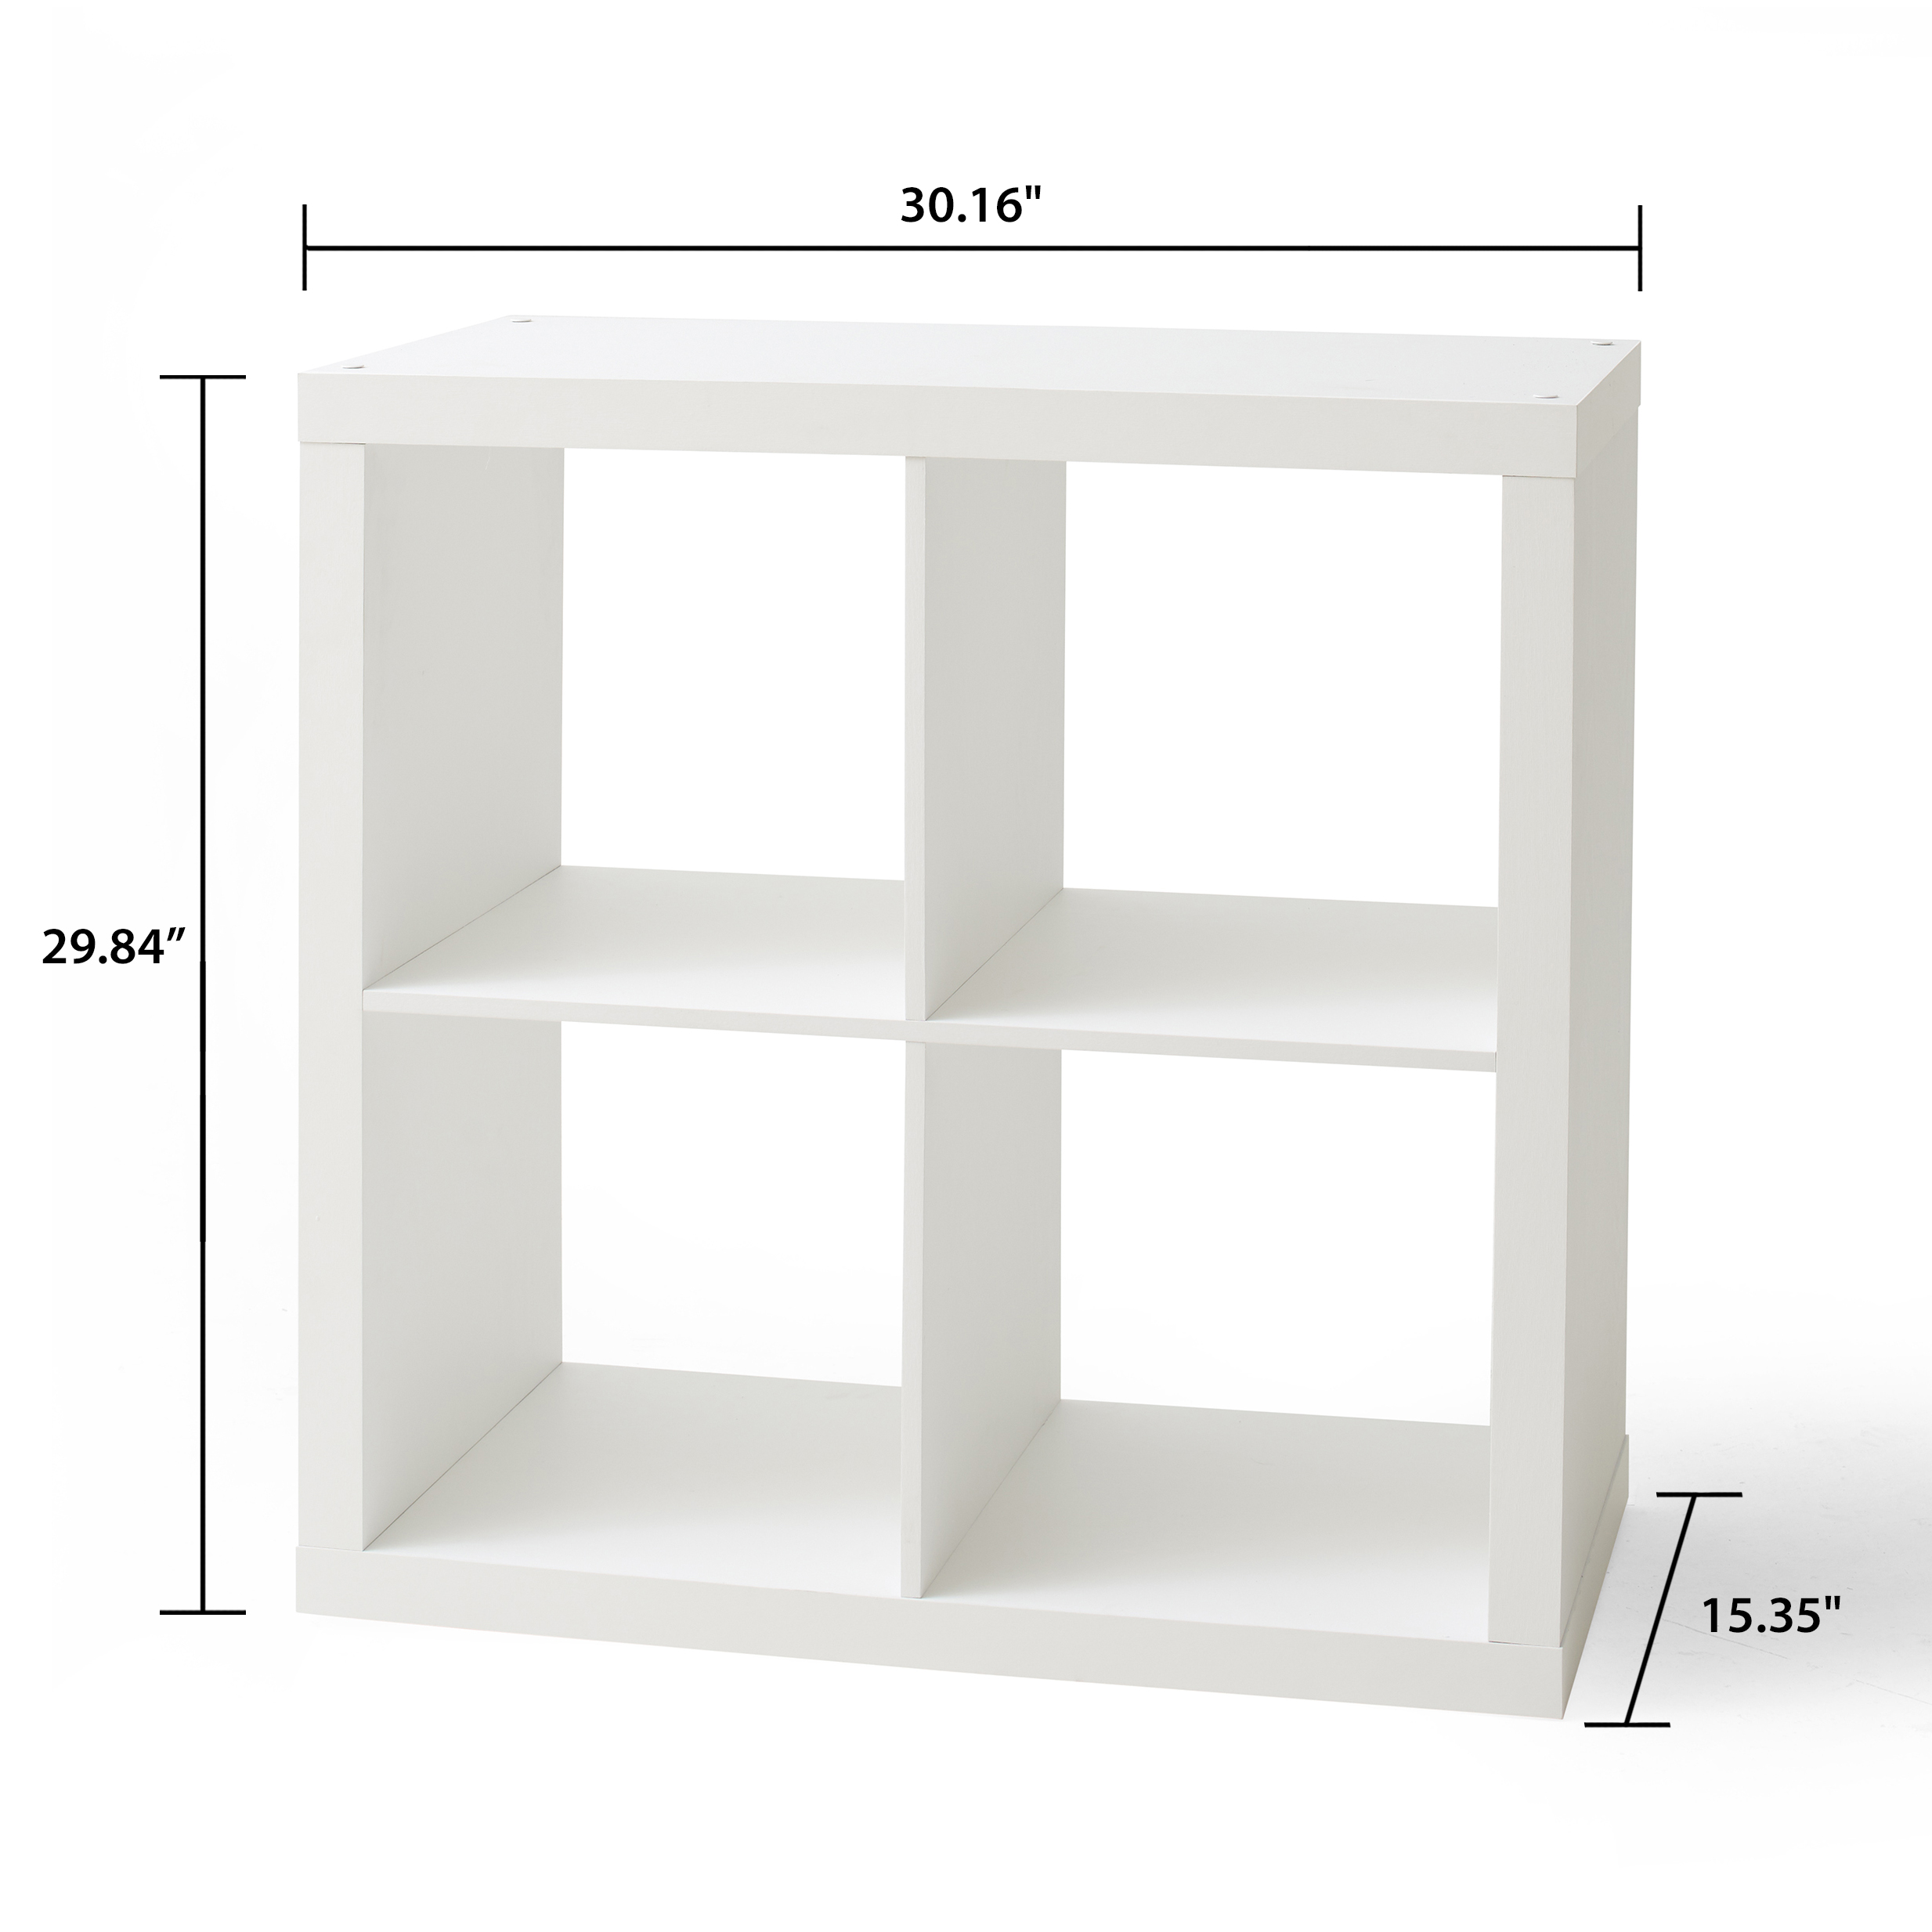 Better Homes & Gardens 4-Cube Storage Organizer, White Texture - image 5 of 7